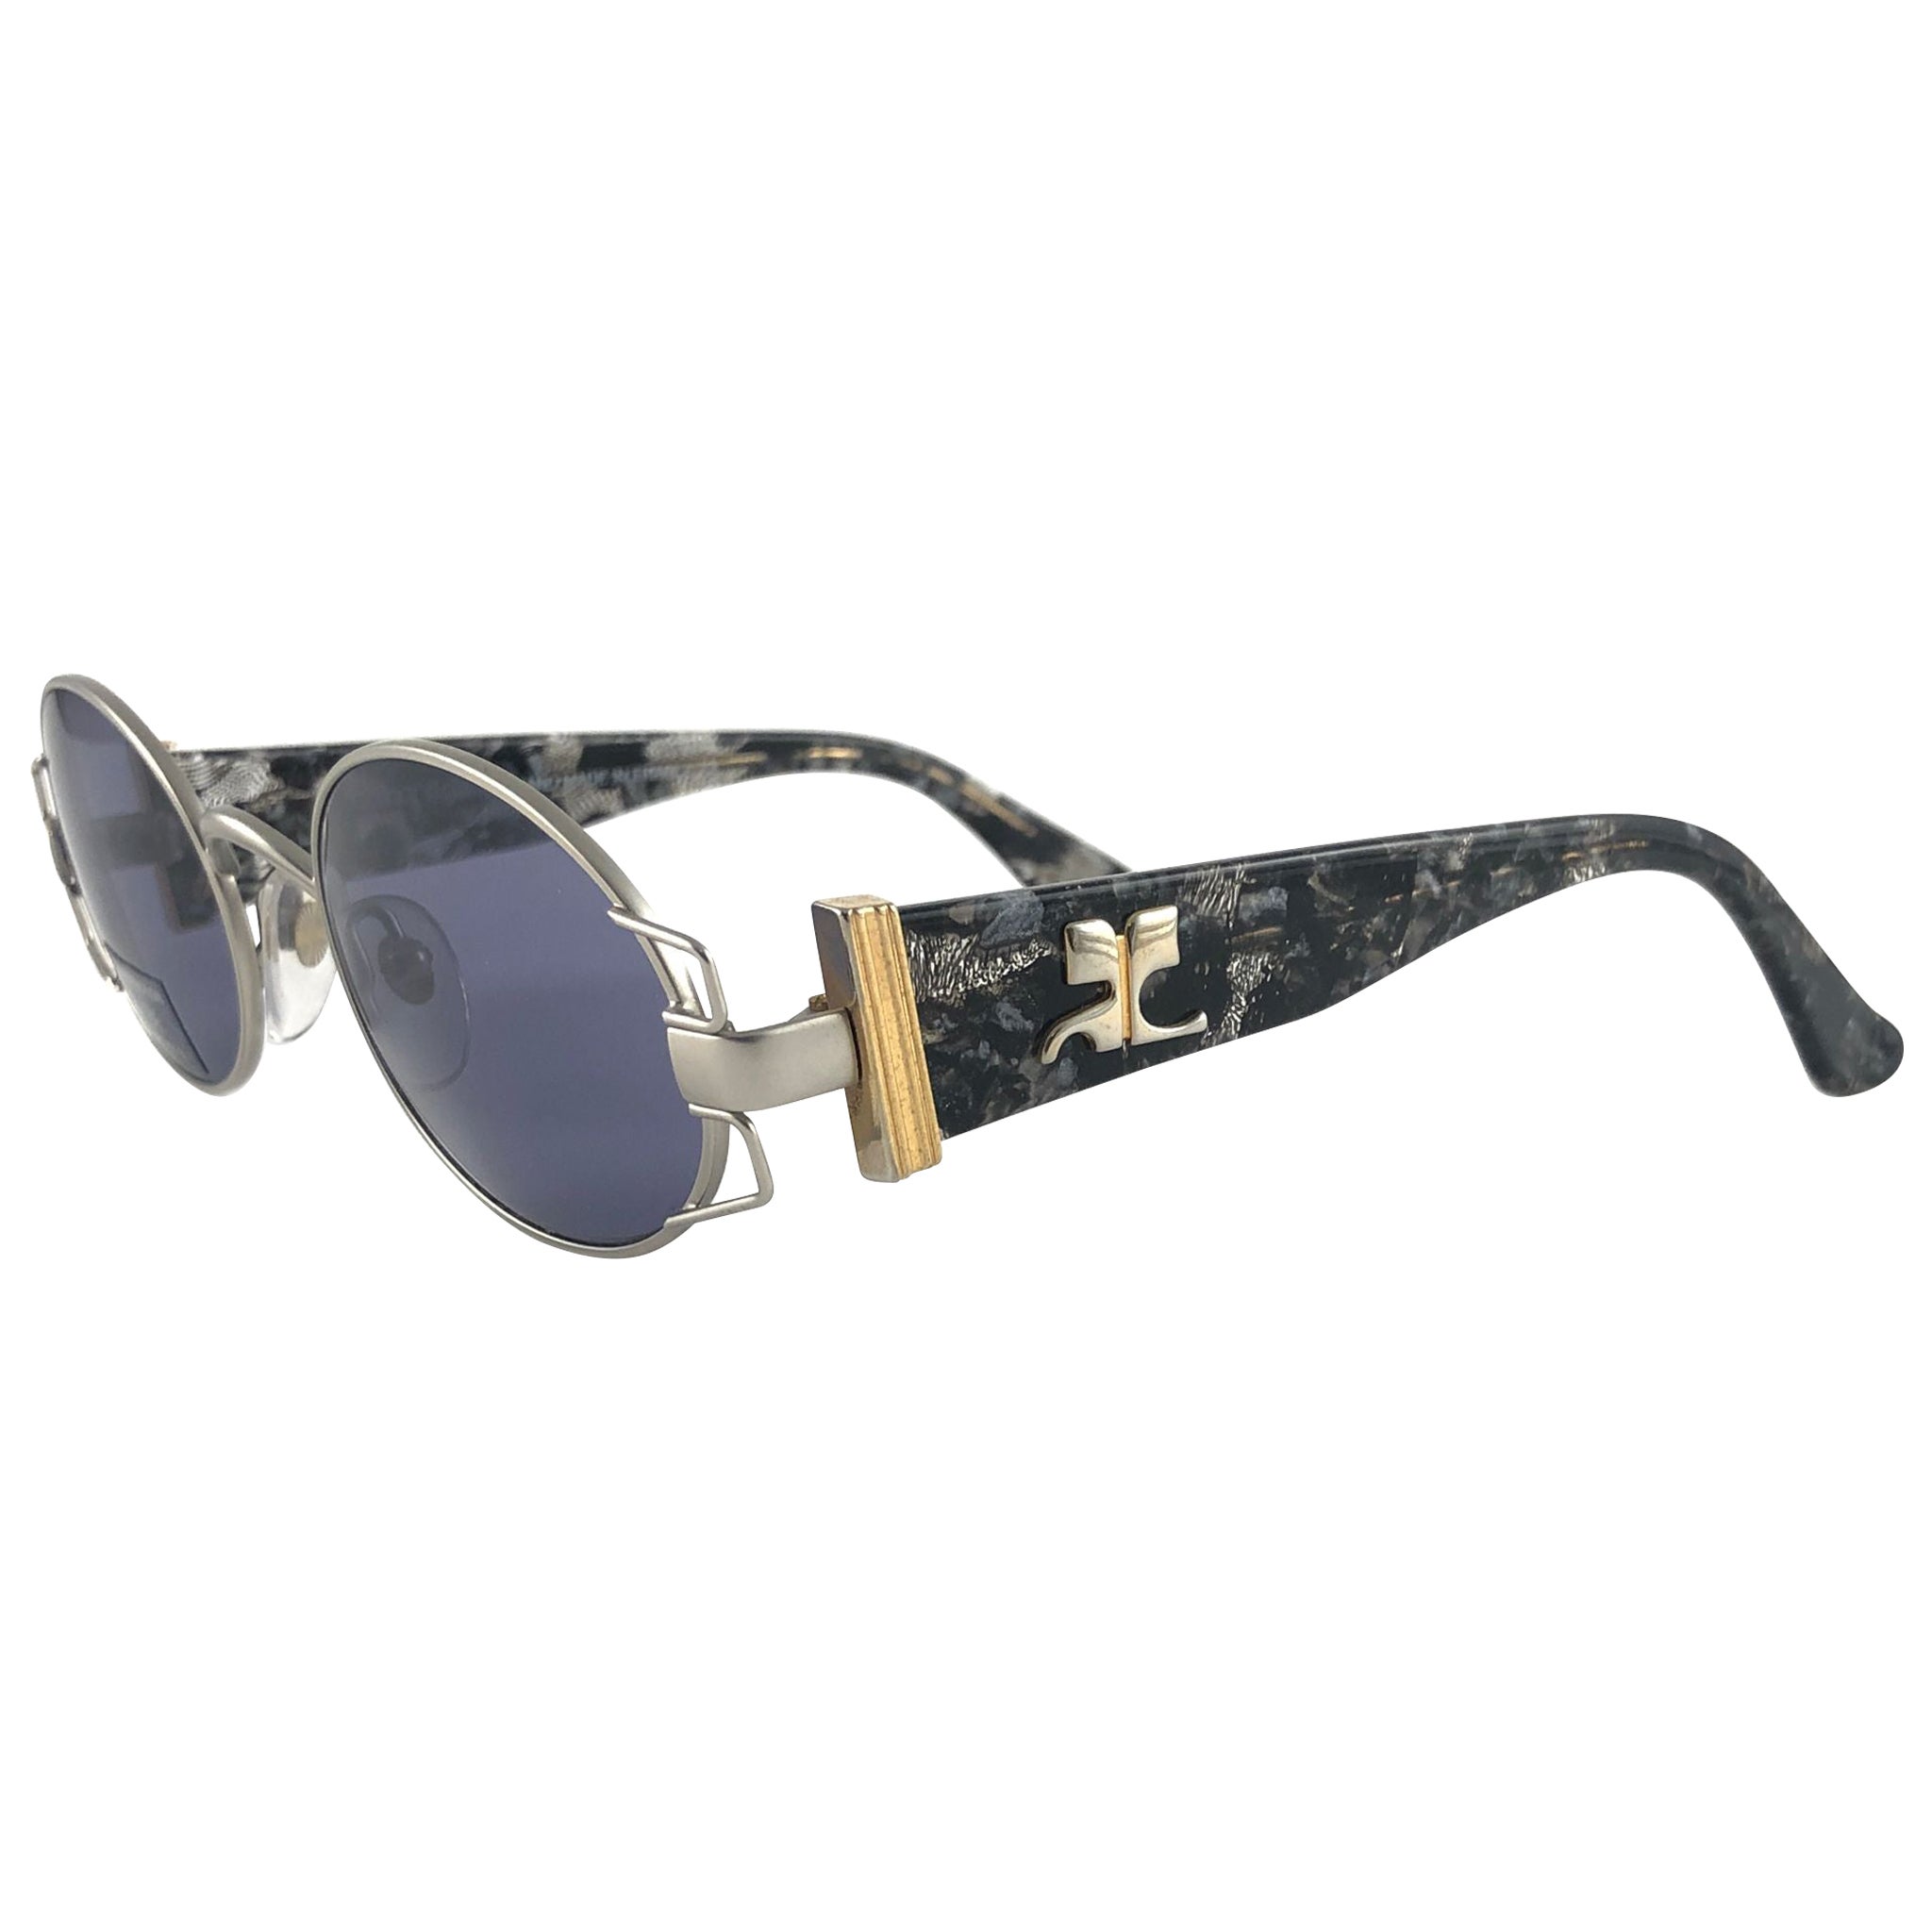 New Vintage Courreges 9430 Oval Metallic Frame 1980's Sunglasses Handmade France